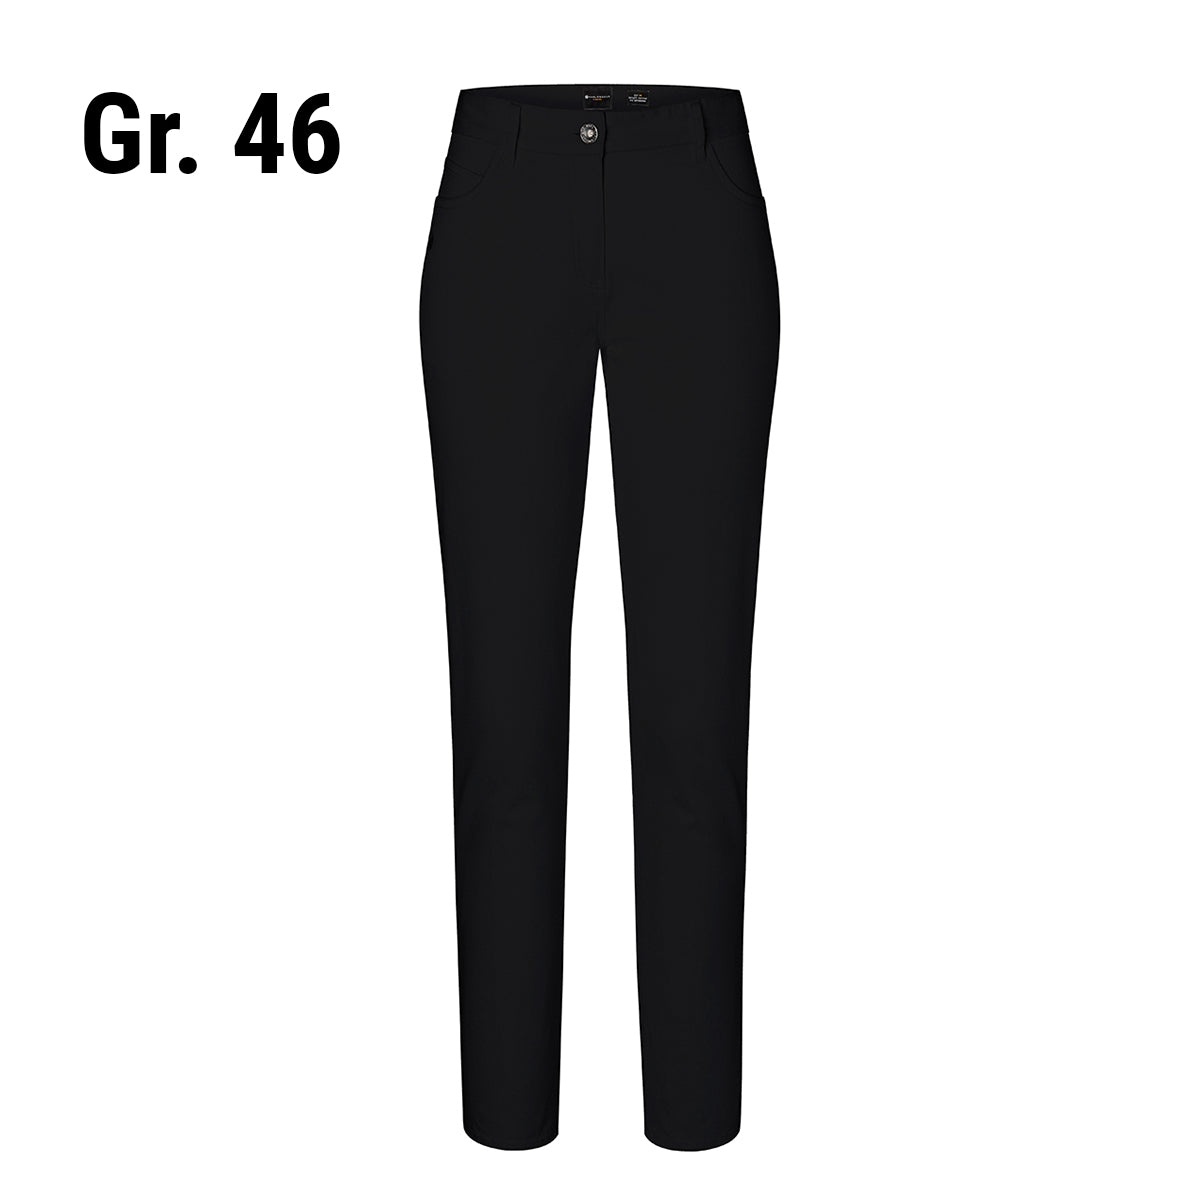 Karlowsky - 5-lomme bukser til damer - Sort - Størrelse: 46